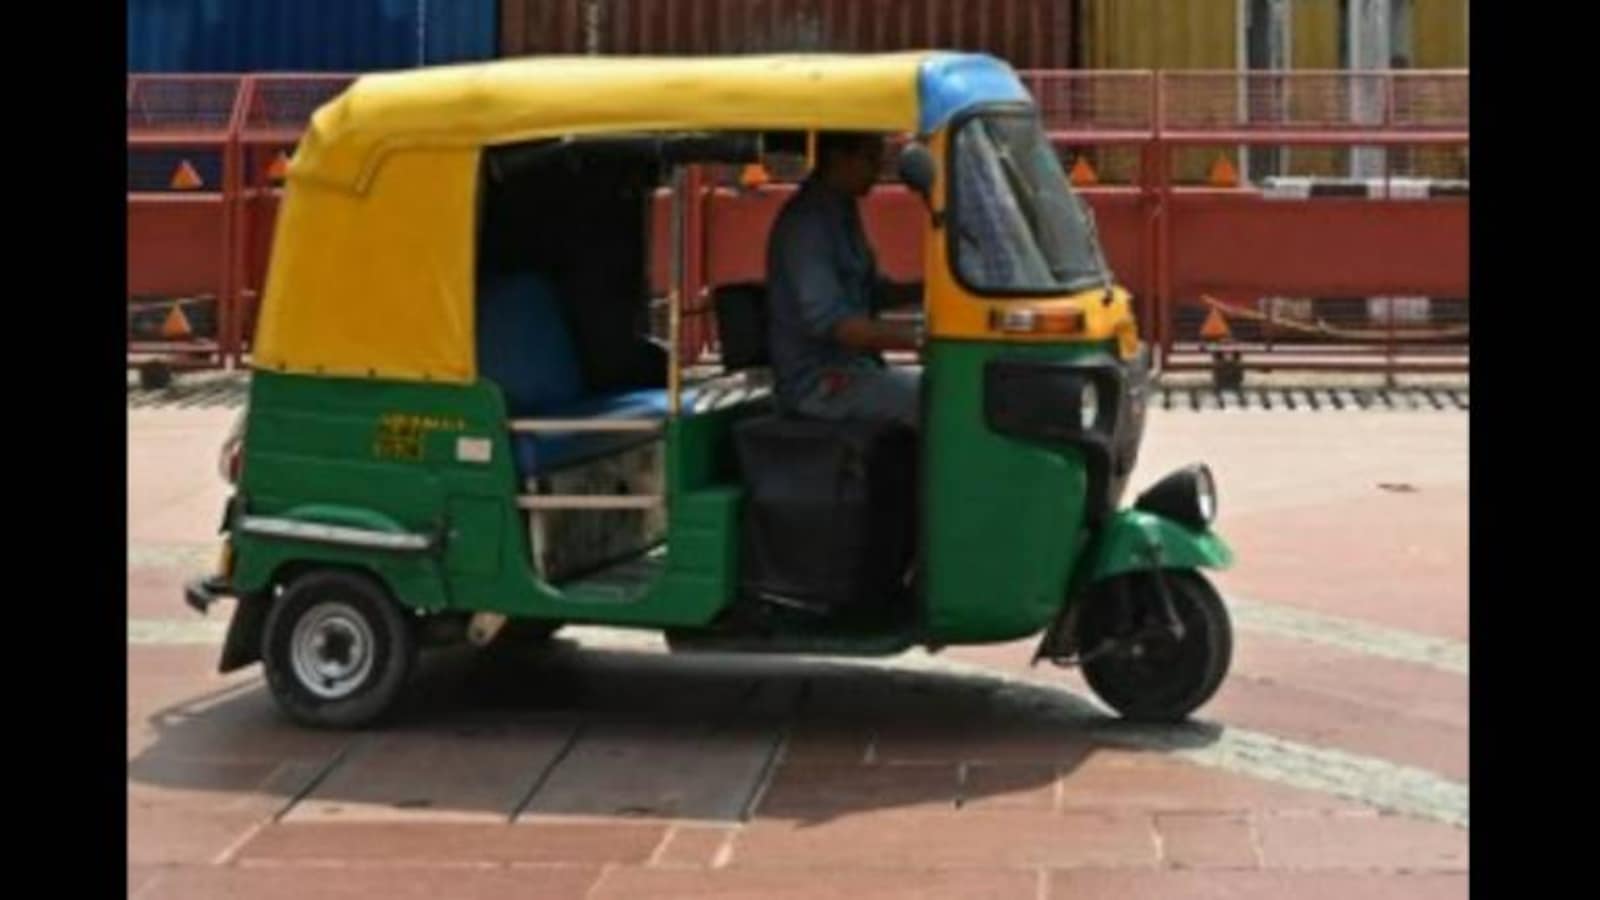 uber: Bengaluru commuter's amusing Uber alert: 'Need help?' as traffic  stalls - The Economic Times